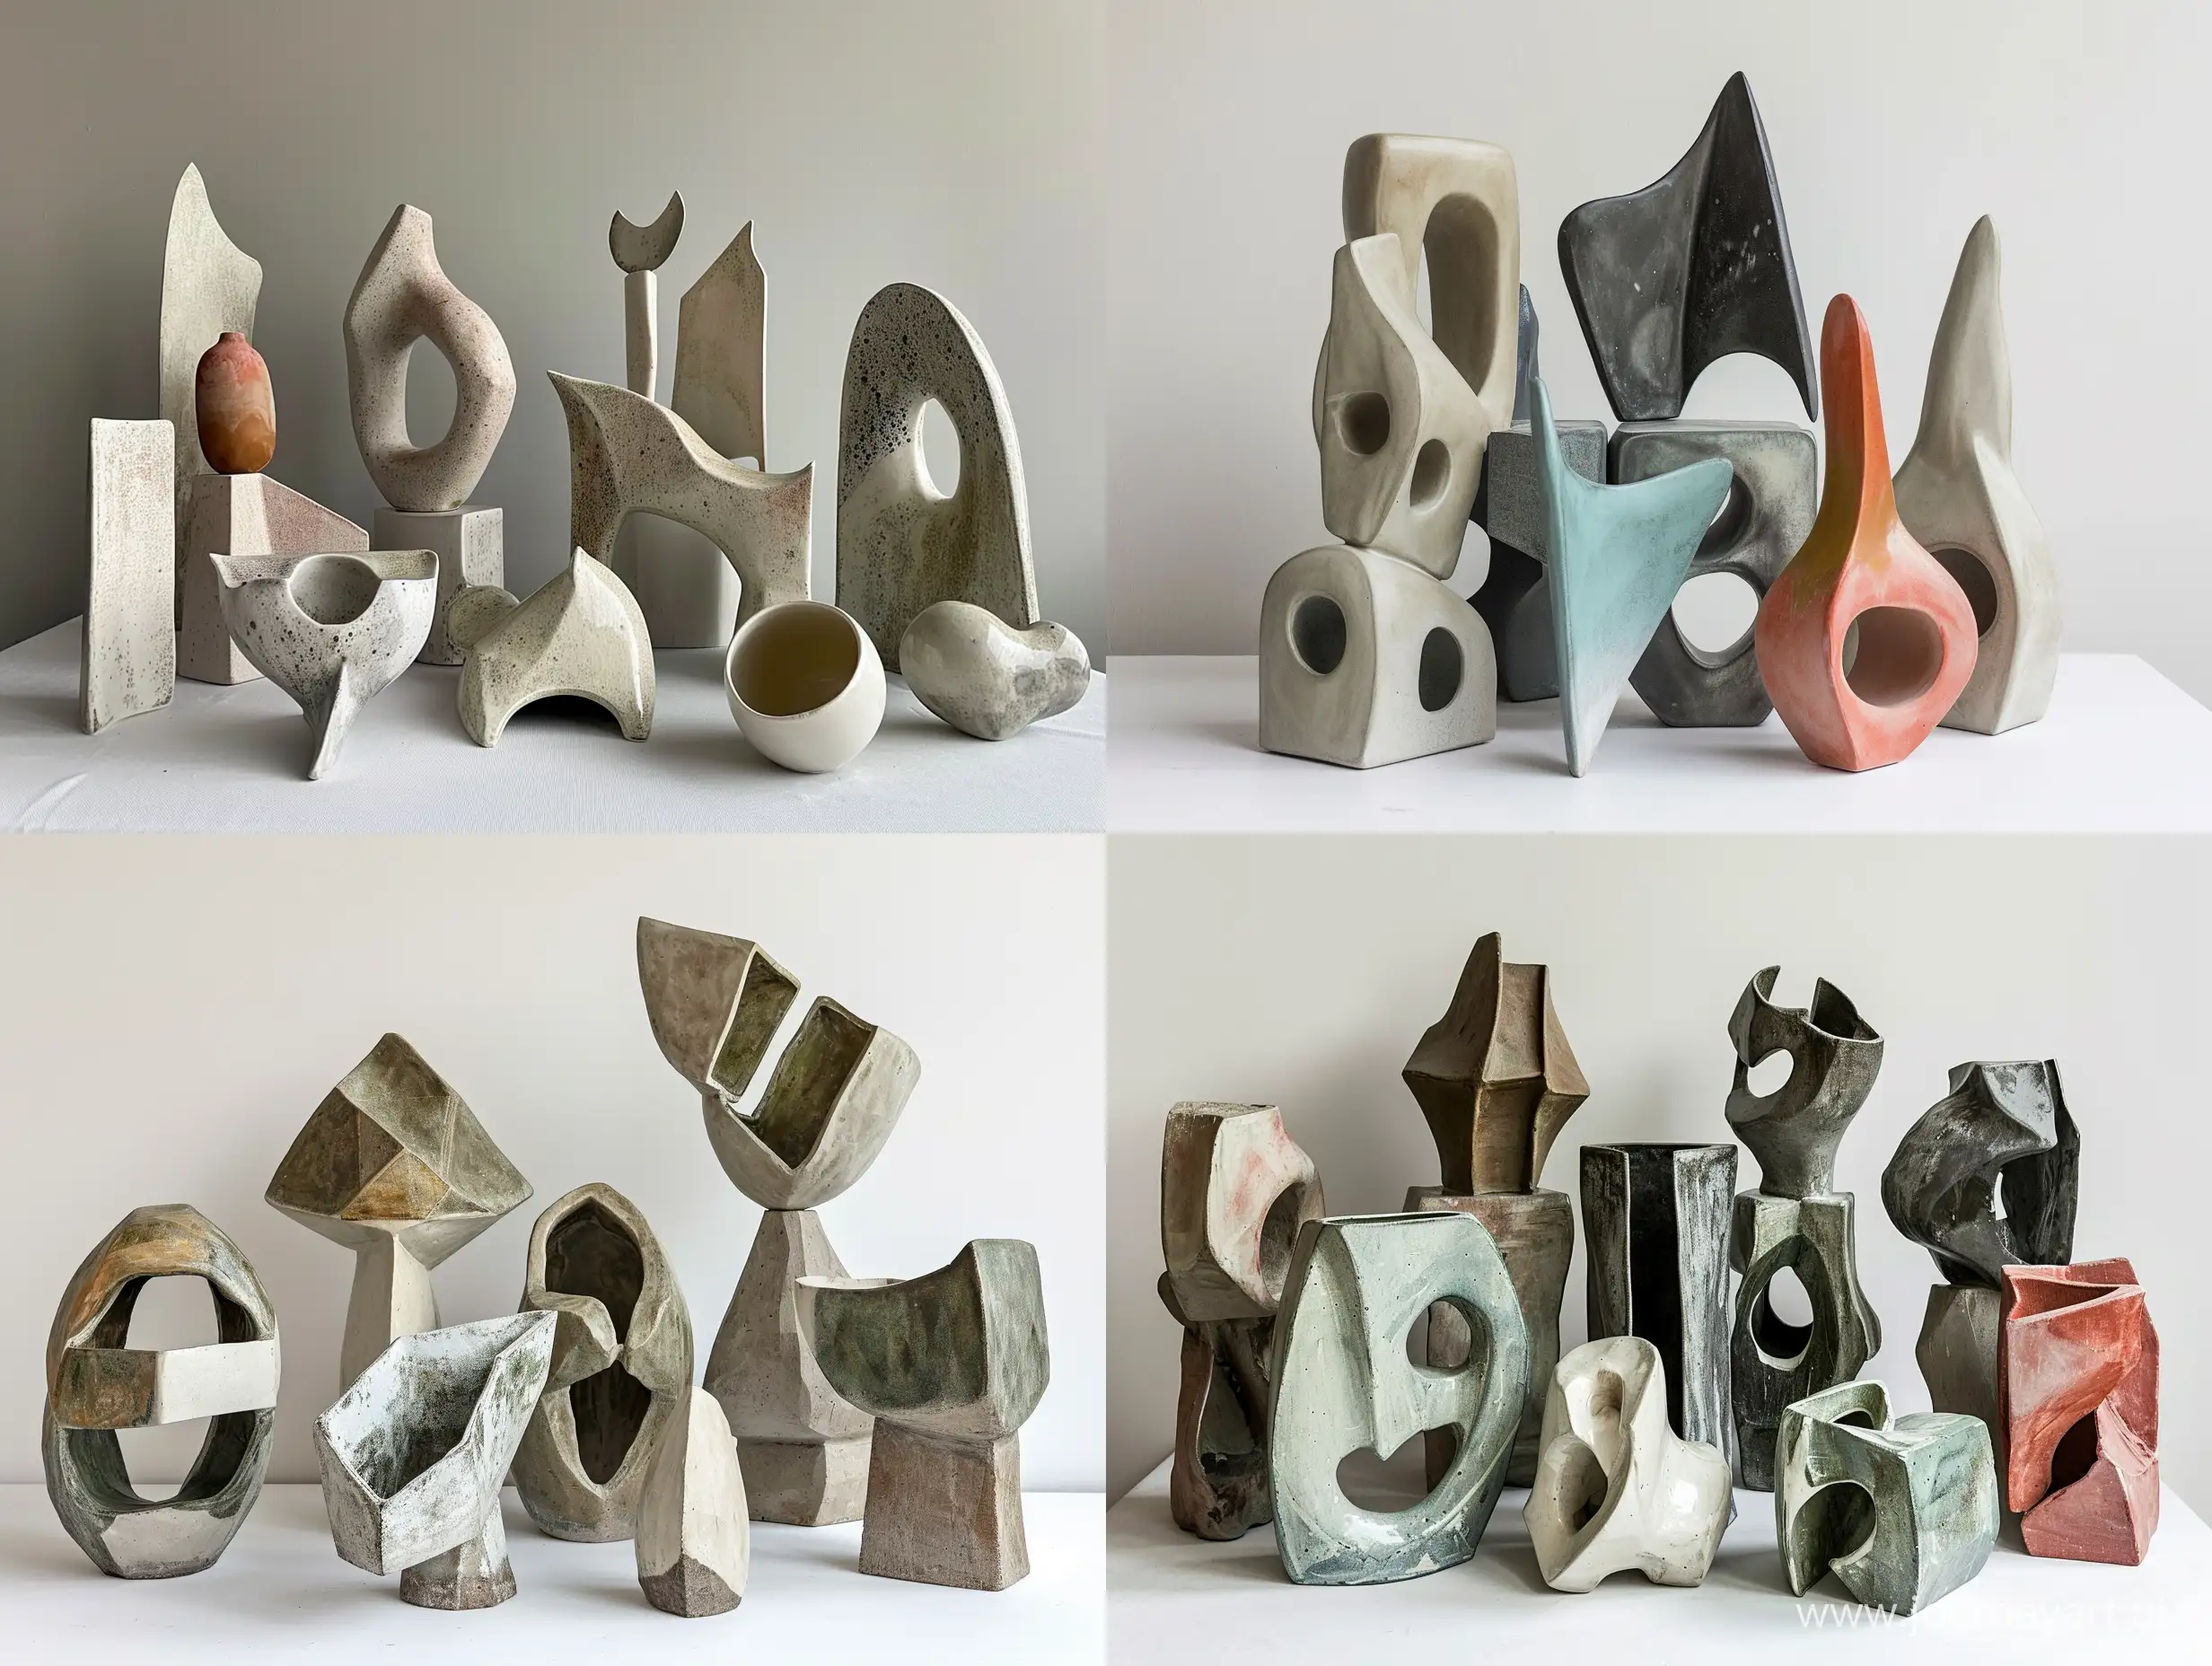 Voluminous-Geometric-Sculpture-in-60s-Style-Abstract-Ceramic-Art